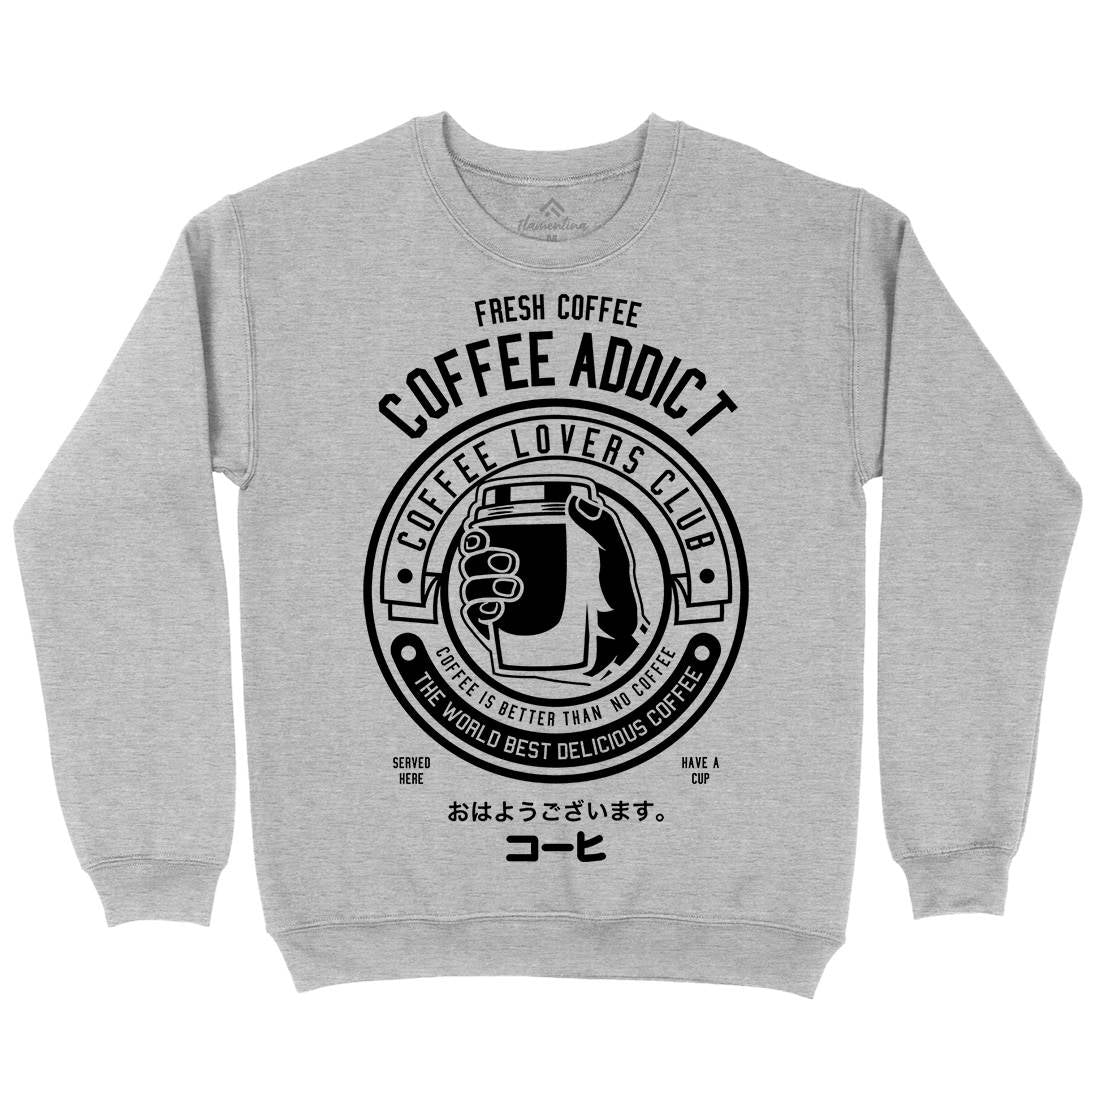 Coffee Addict Kids Crew Neck Sweatshirt Drinks B515